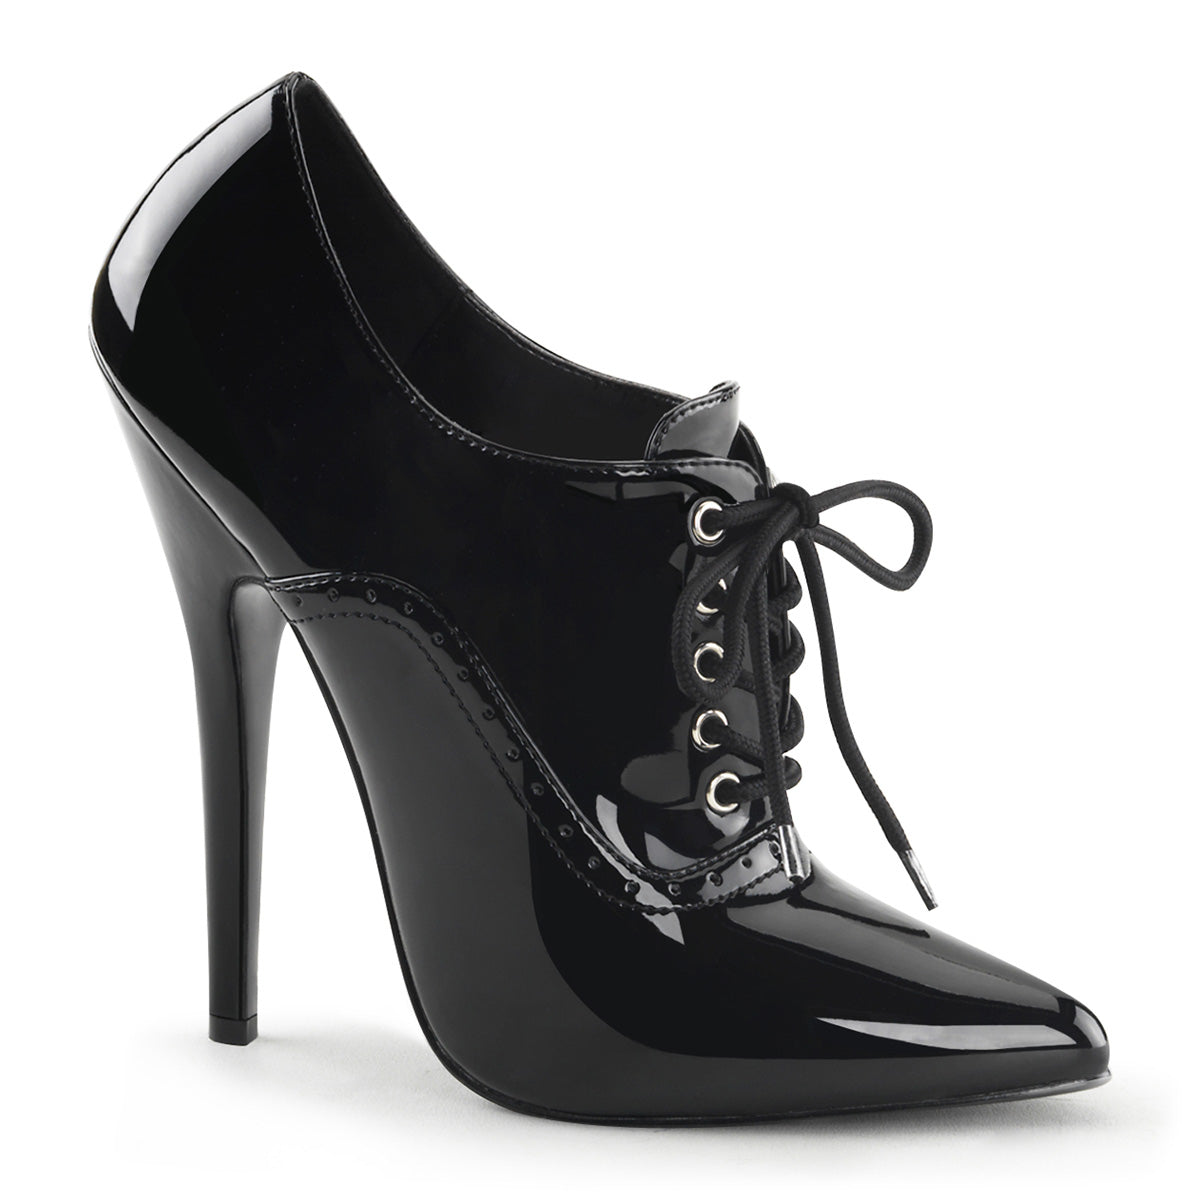 DOMINA-460 Devious 6 Inch Heel Black Patent Erotic Shoes